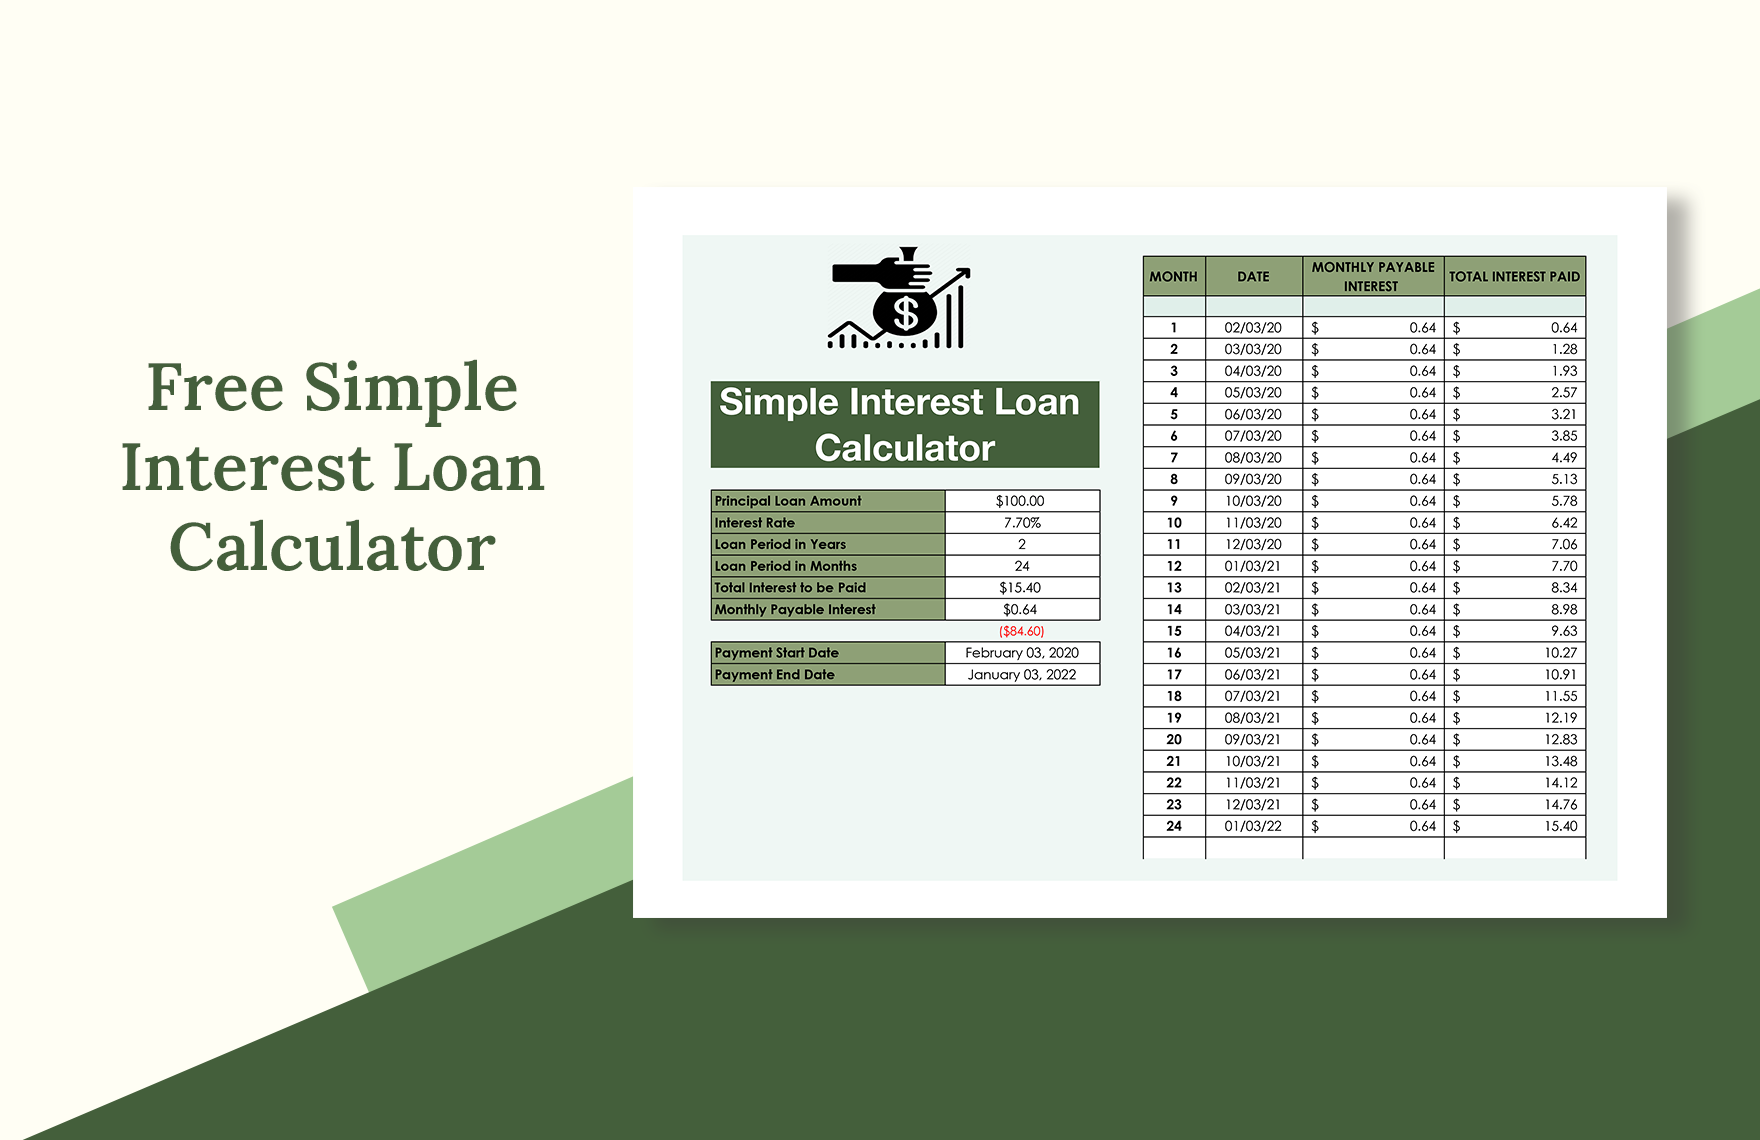 Free Simple Interest Loan Calculator